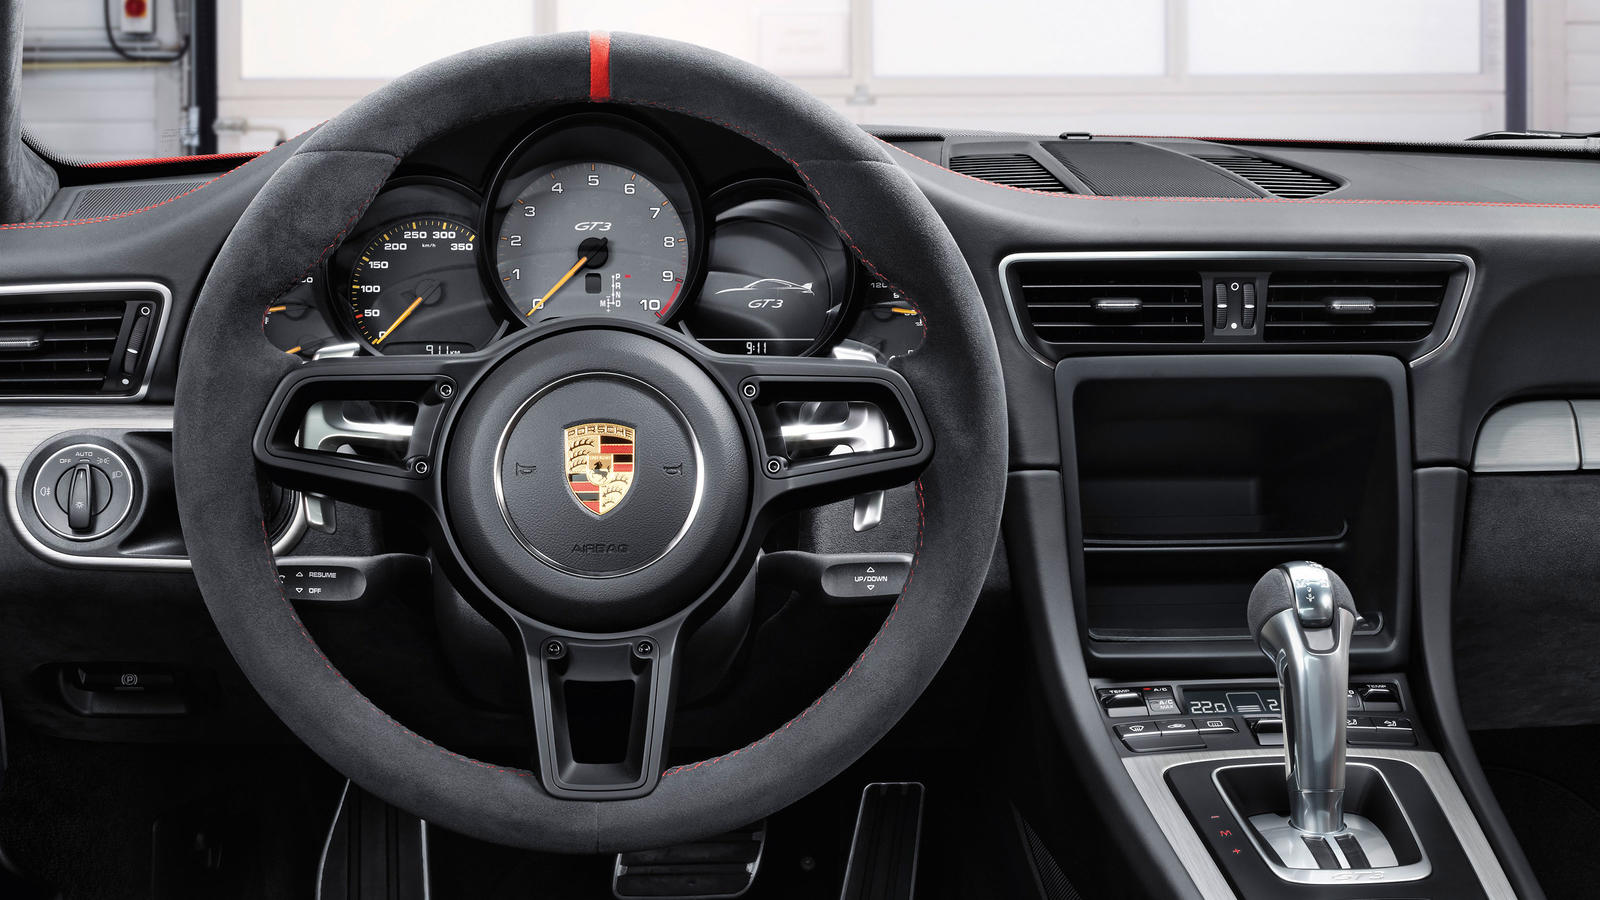 Interior Design Of The 2018 Porsche 911 Gt3 Buymyluxurycar Com